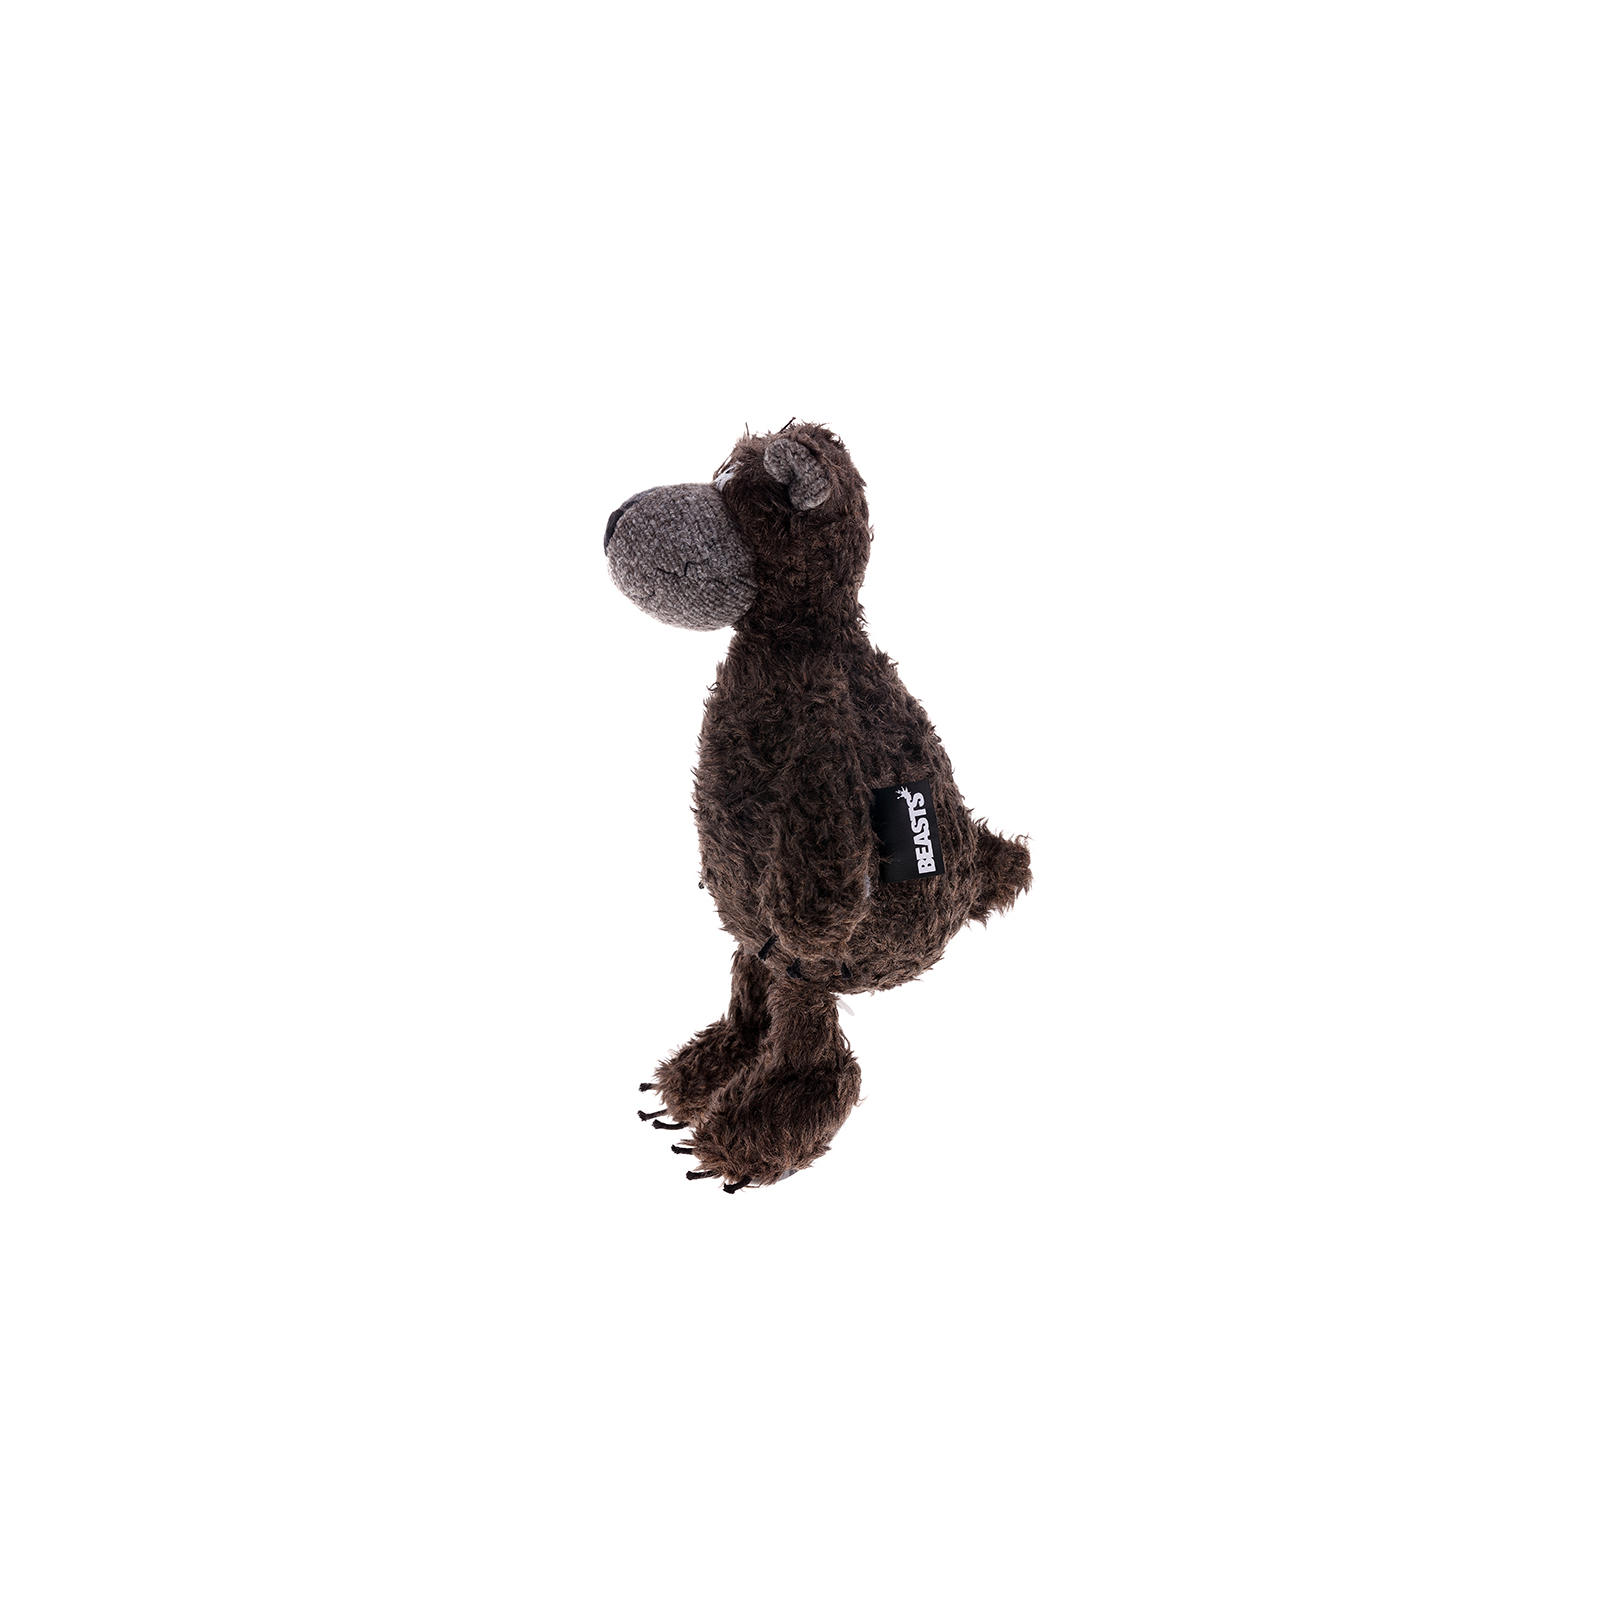 М'яка іграшка Sigikid Beasts Медведь Бонсай 20 см (38357SK) зображення 2